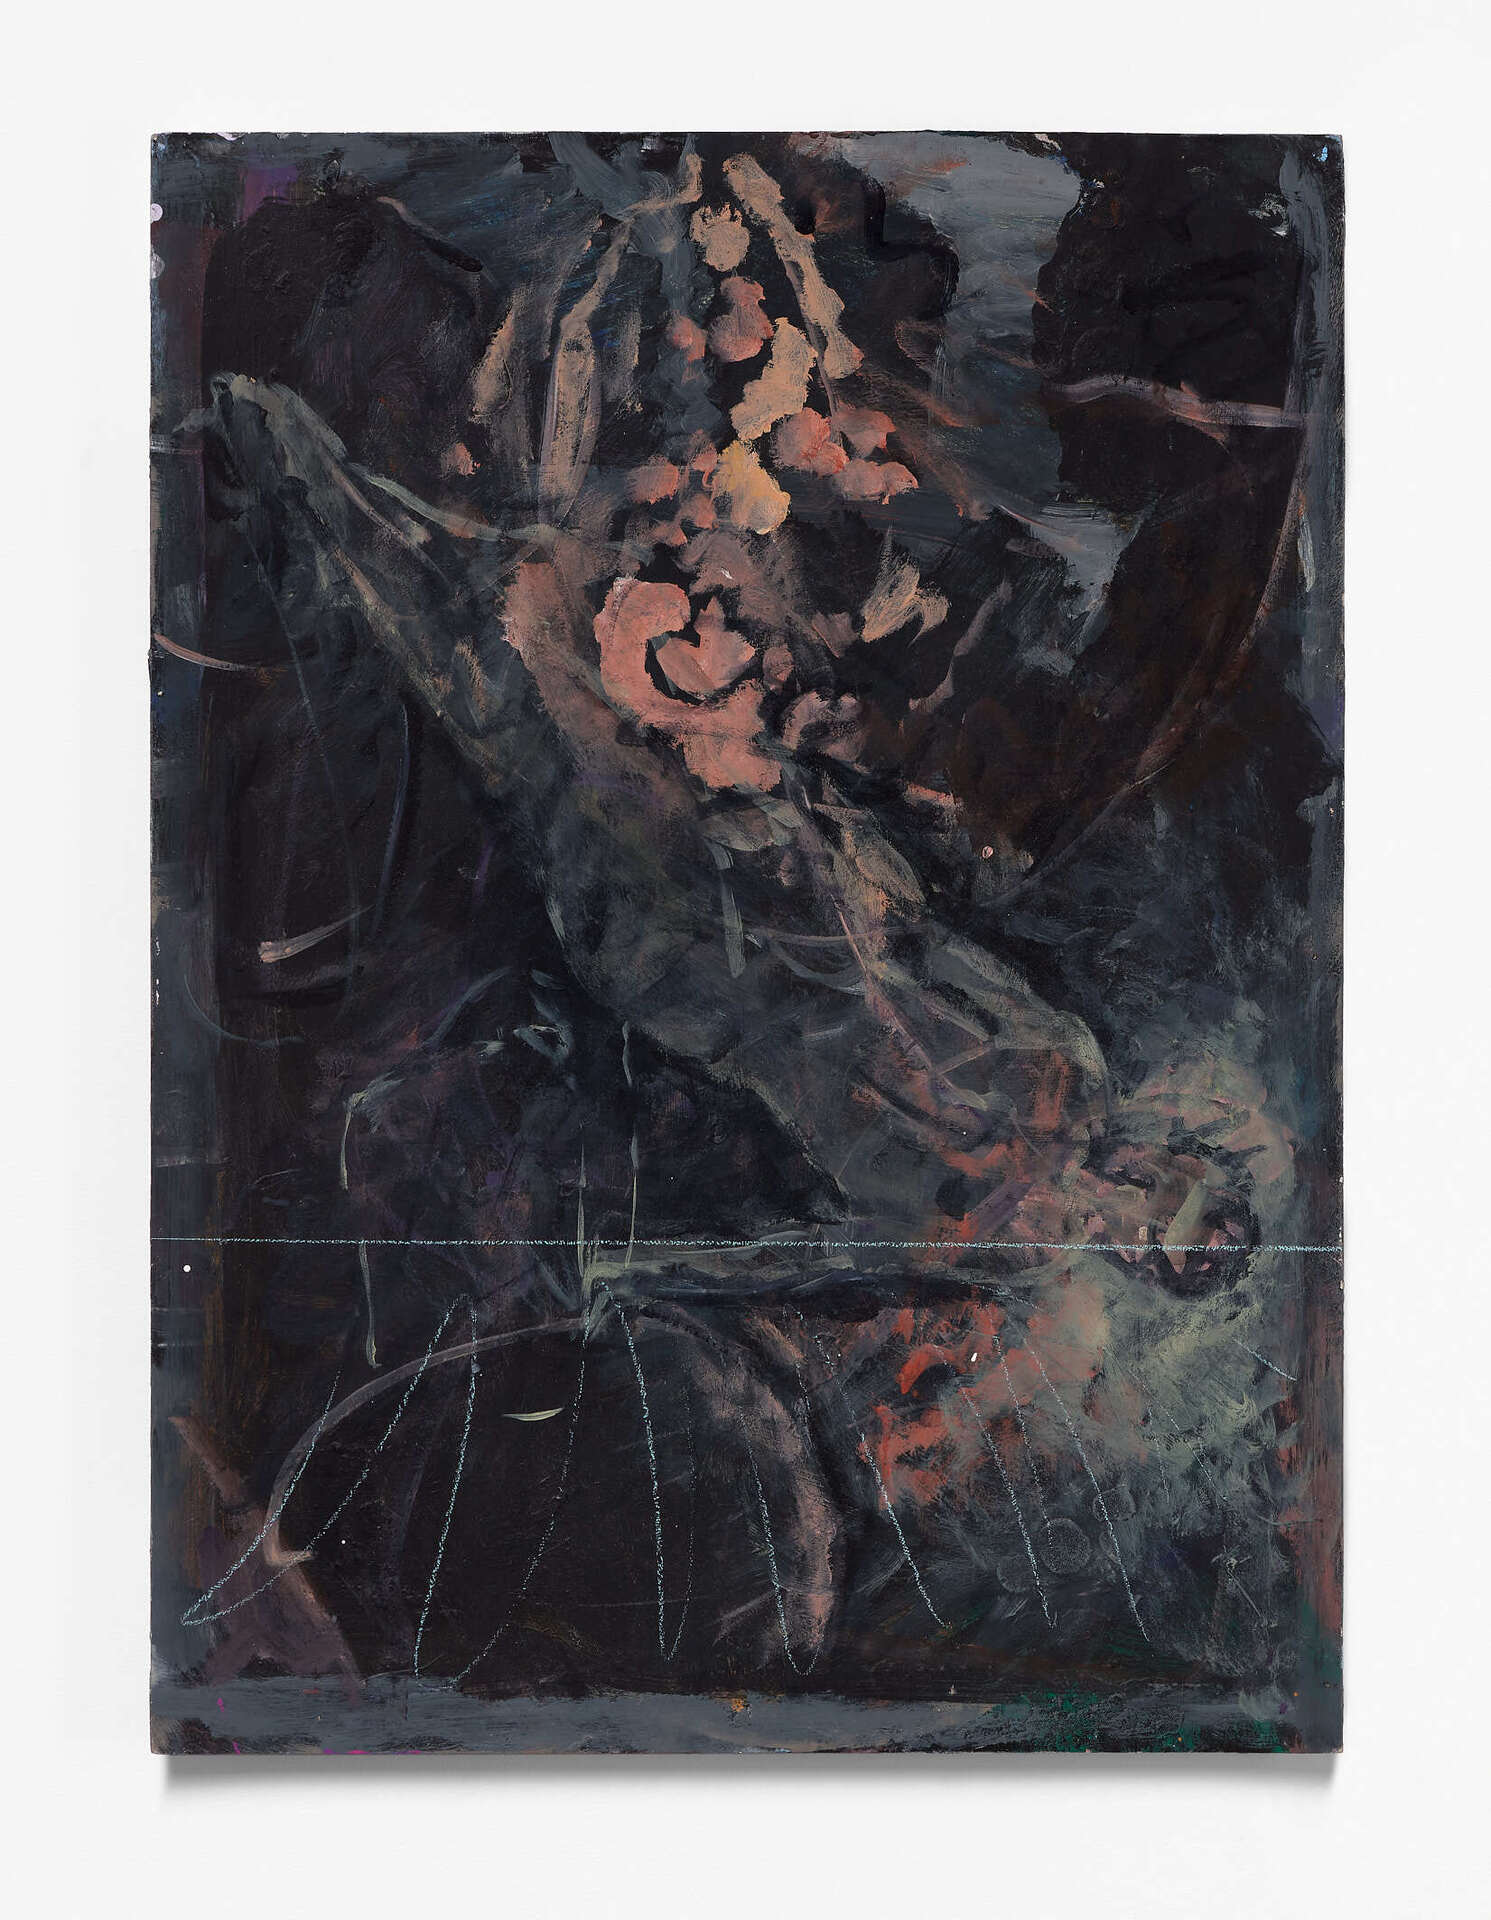 Patrick Hartigan, Valkyrie, 2021, Acrylic and pencil on board, 59.5 x 81 cm.